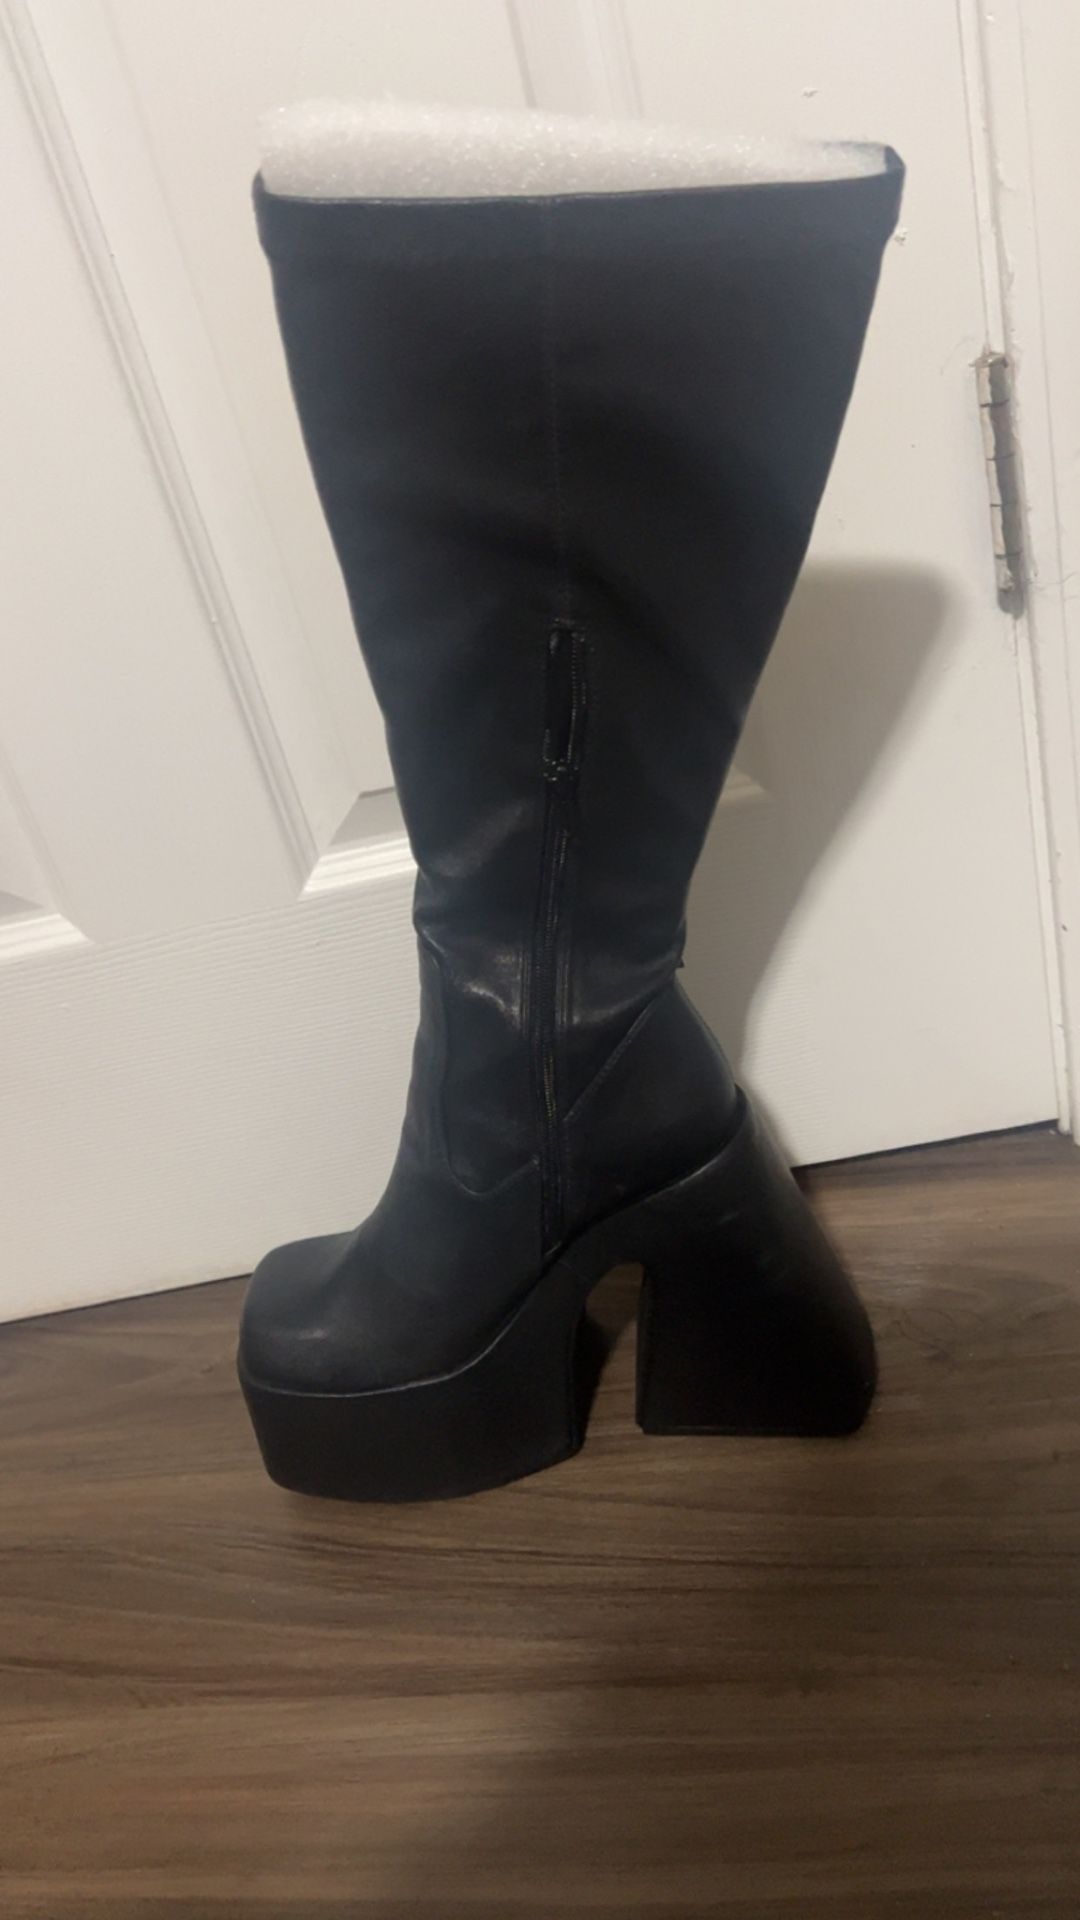 Bratz platform black boots